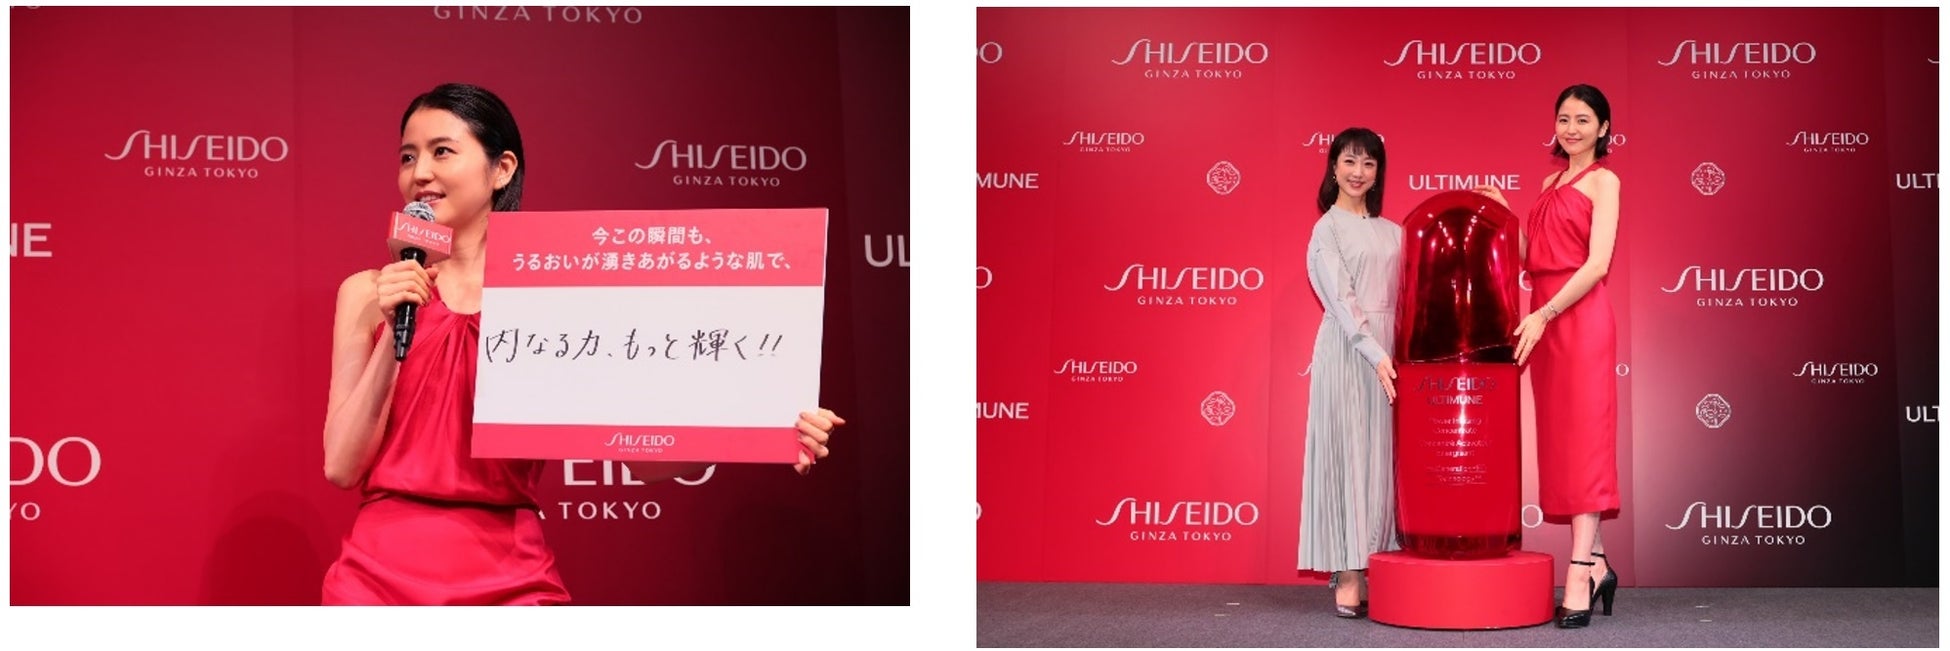 SHISEIDO 新美容液「アルティミューン」発表会に長澤まさみさんが登壇　以前より愛用する「アルティミューン」のアンバサダー就任に歓喜の声。